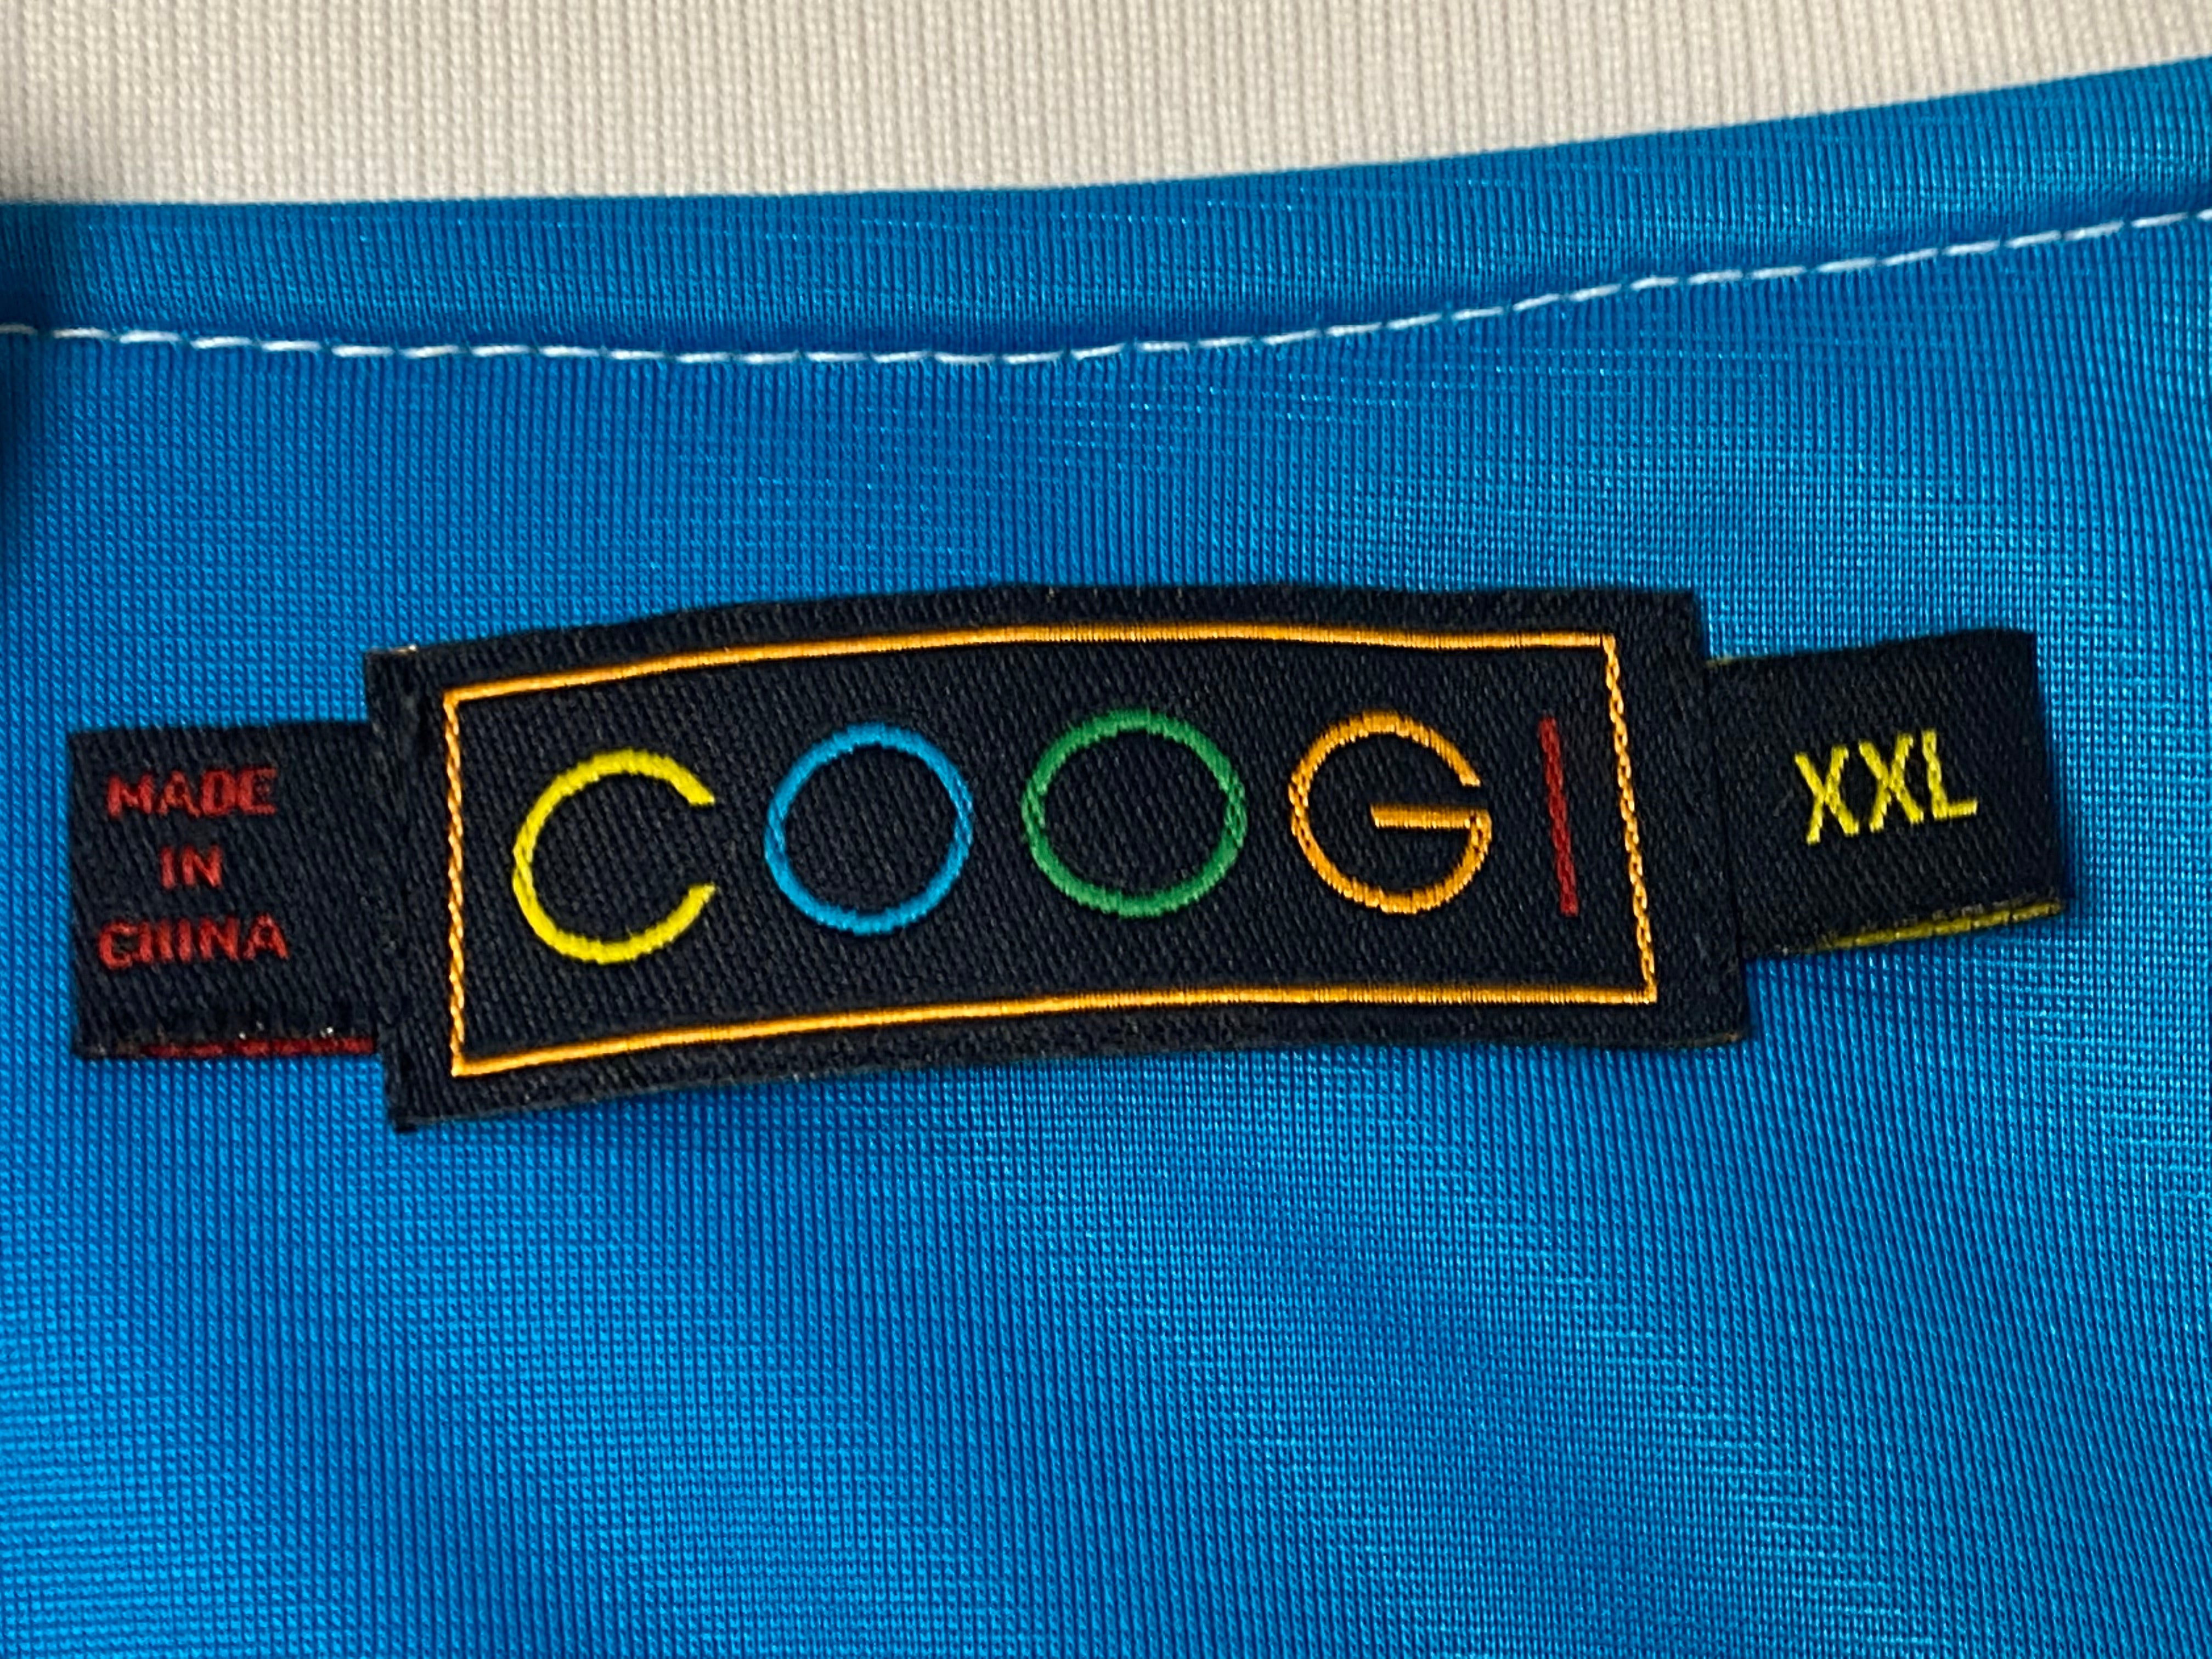 Coogi Color Block Warm Up Jacket - Blue Multi